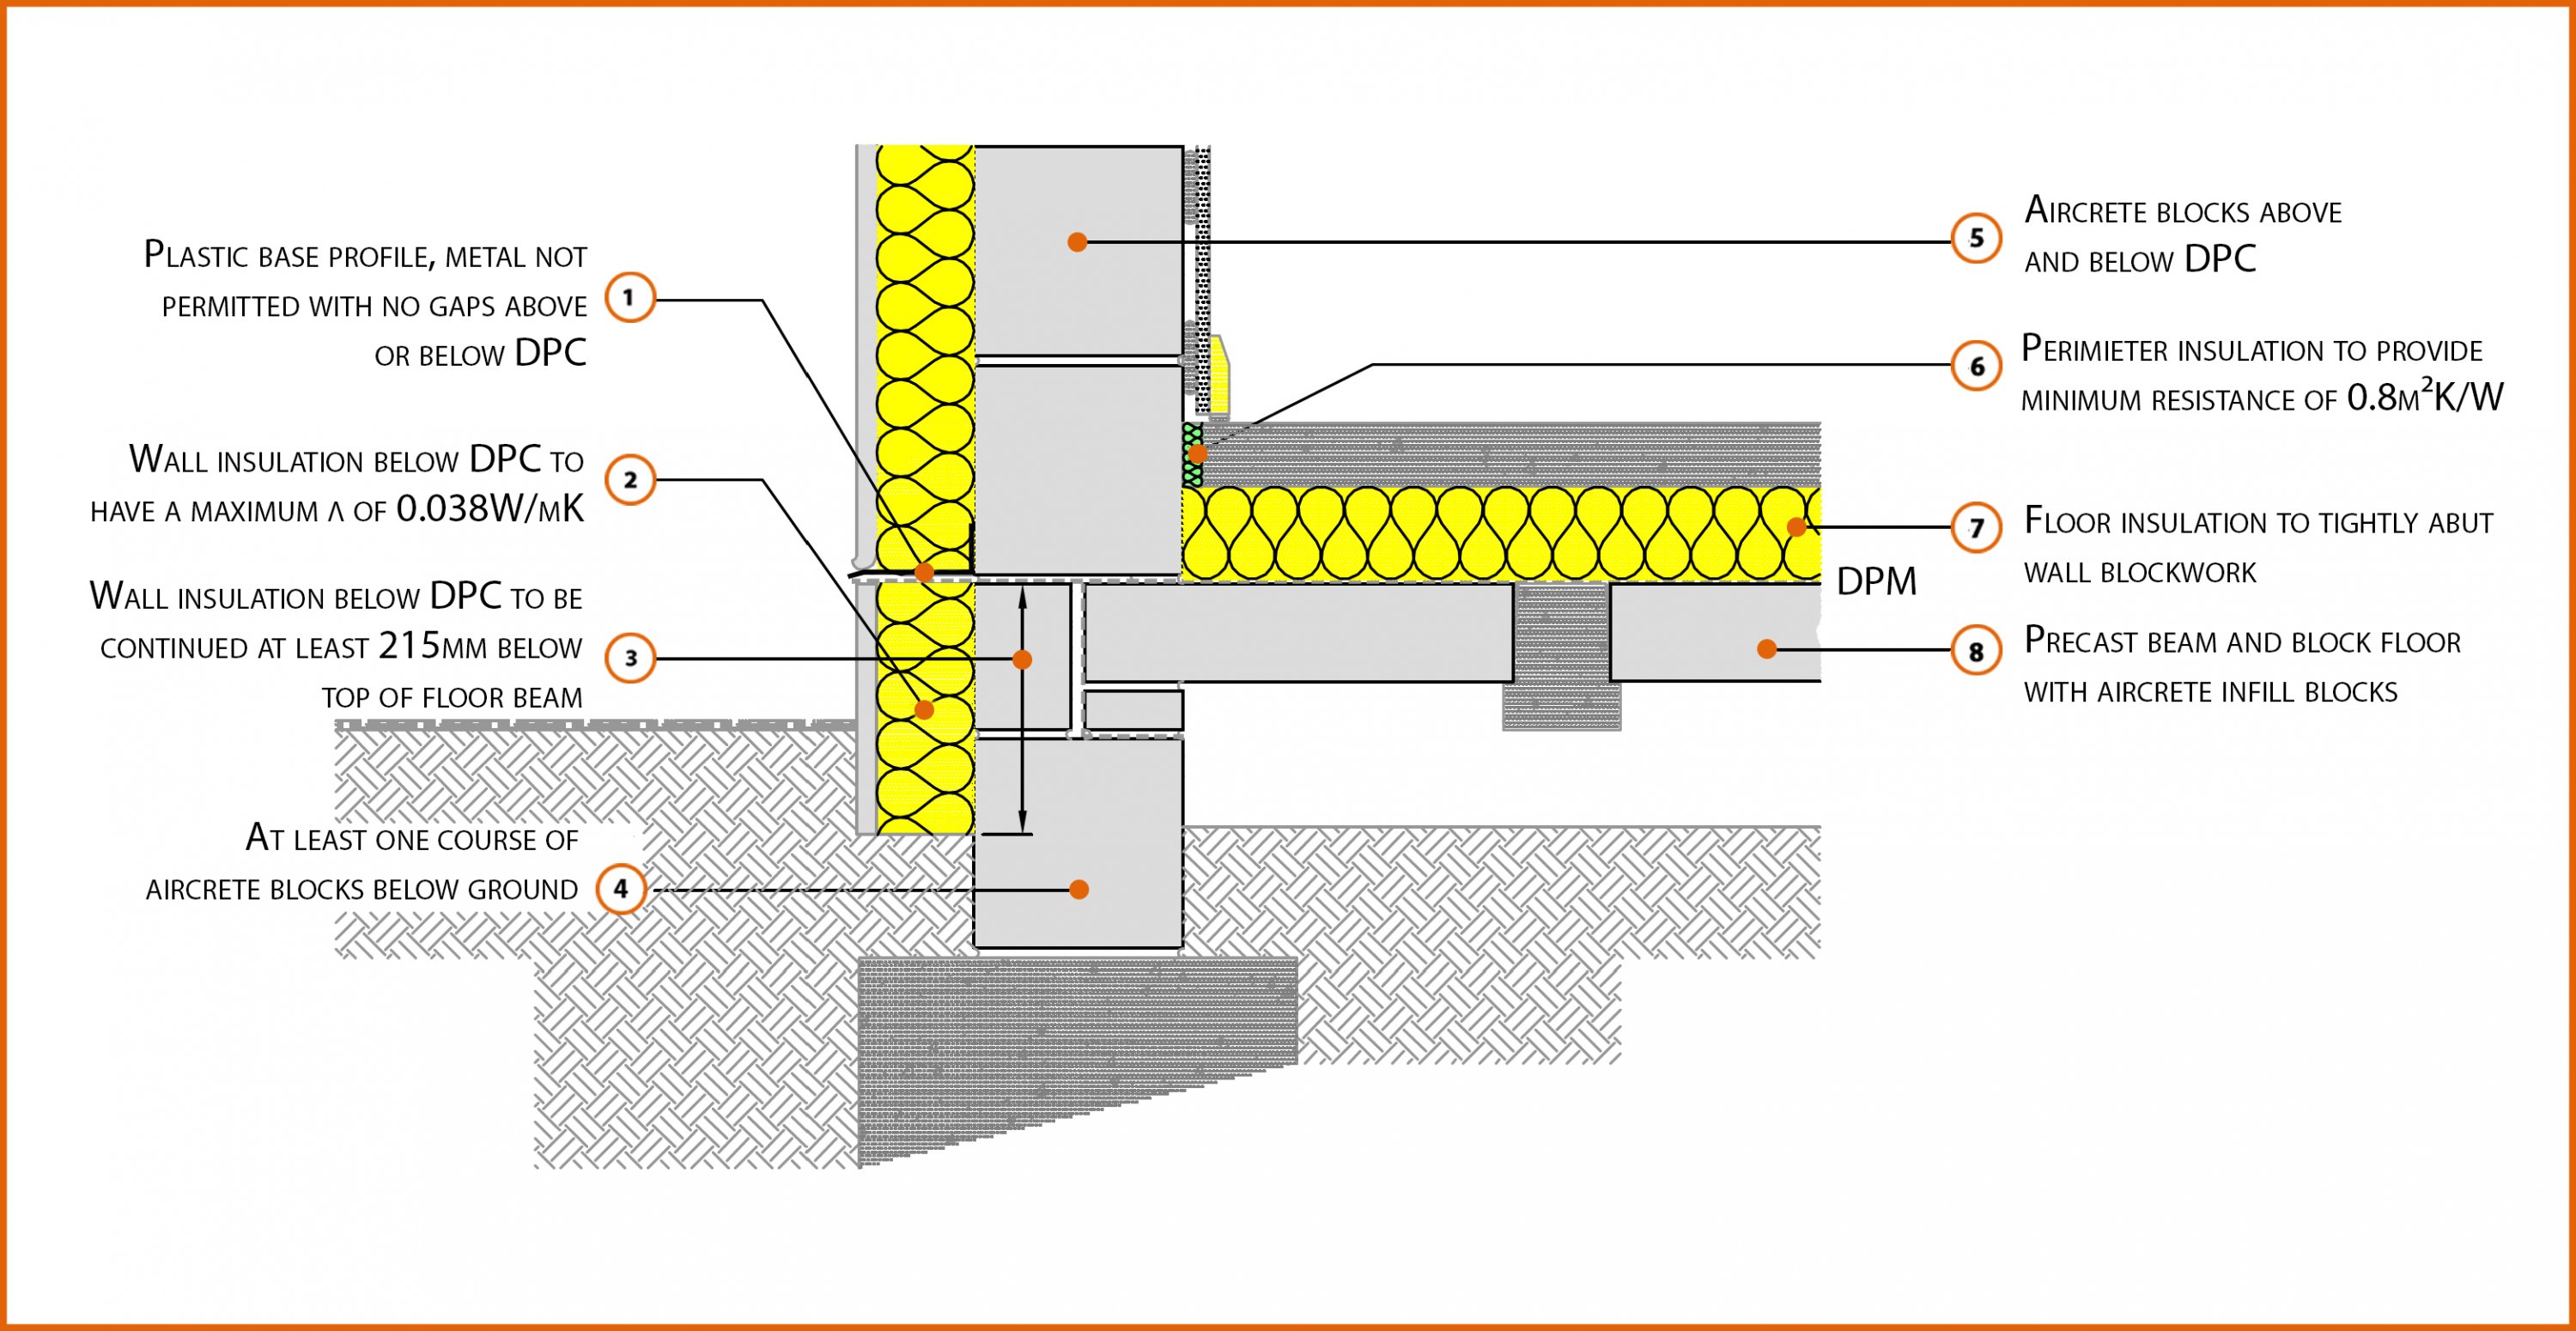 E5SMEW2 Suspended Beam and Block Floor, Insulation above Slab | LABC